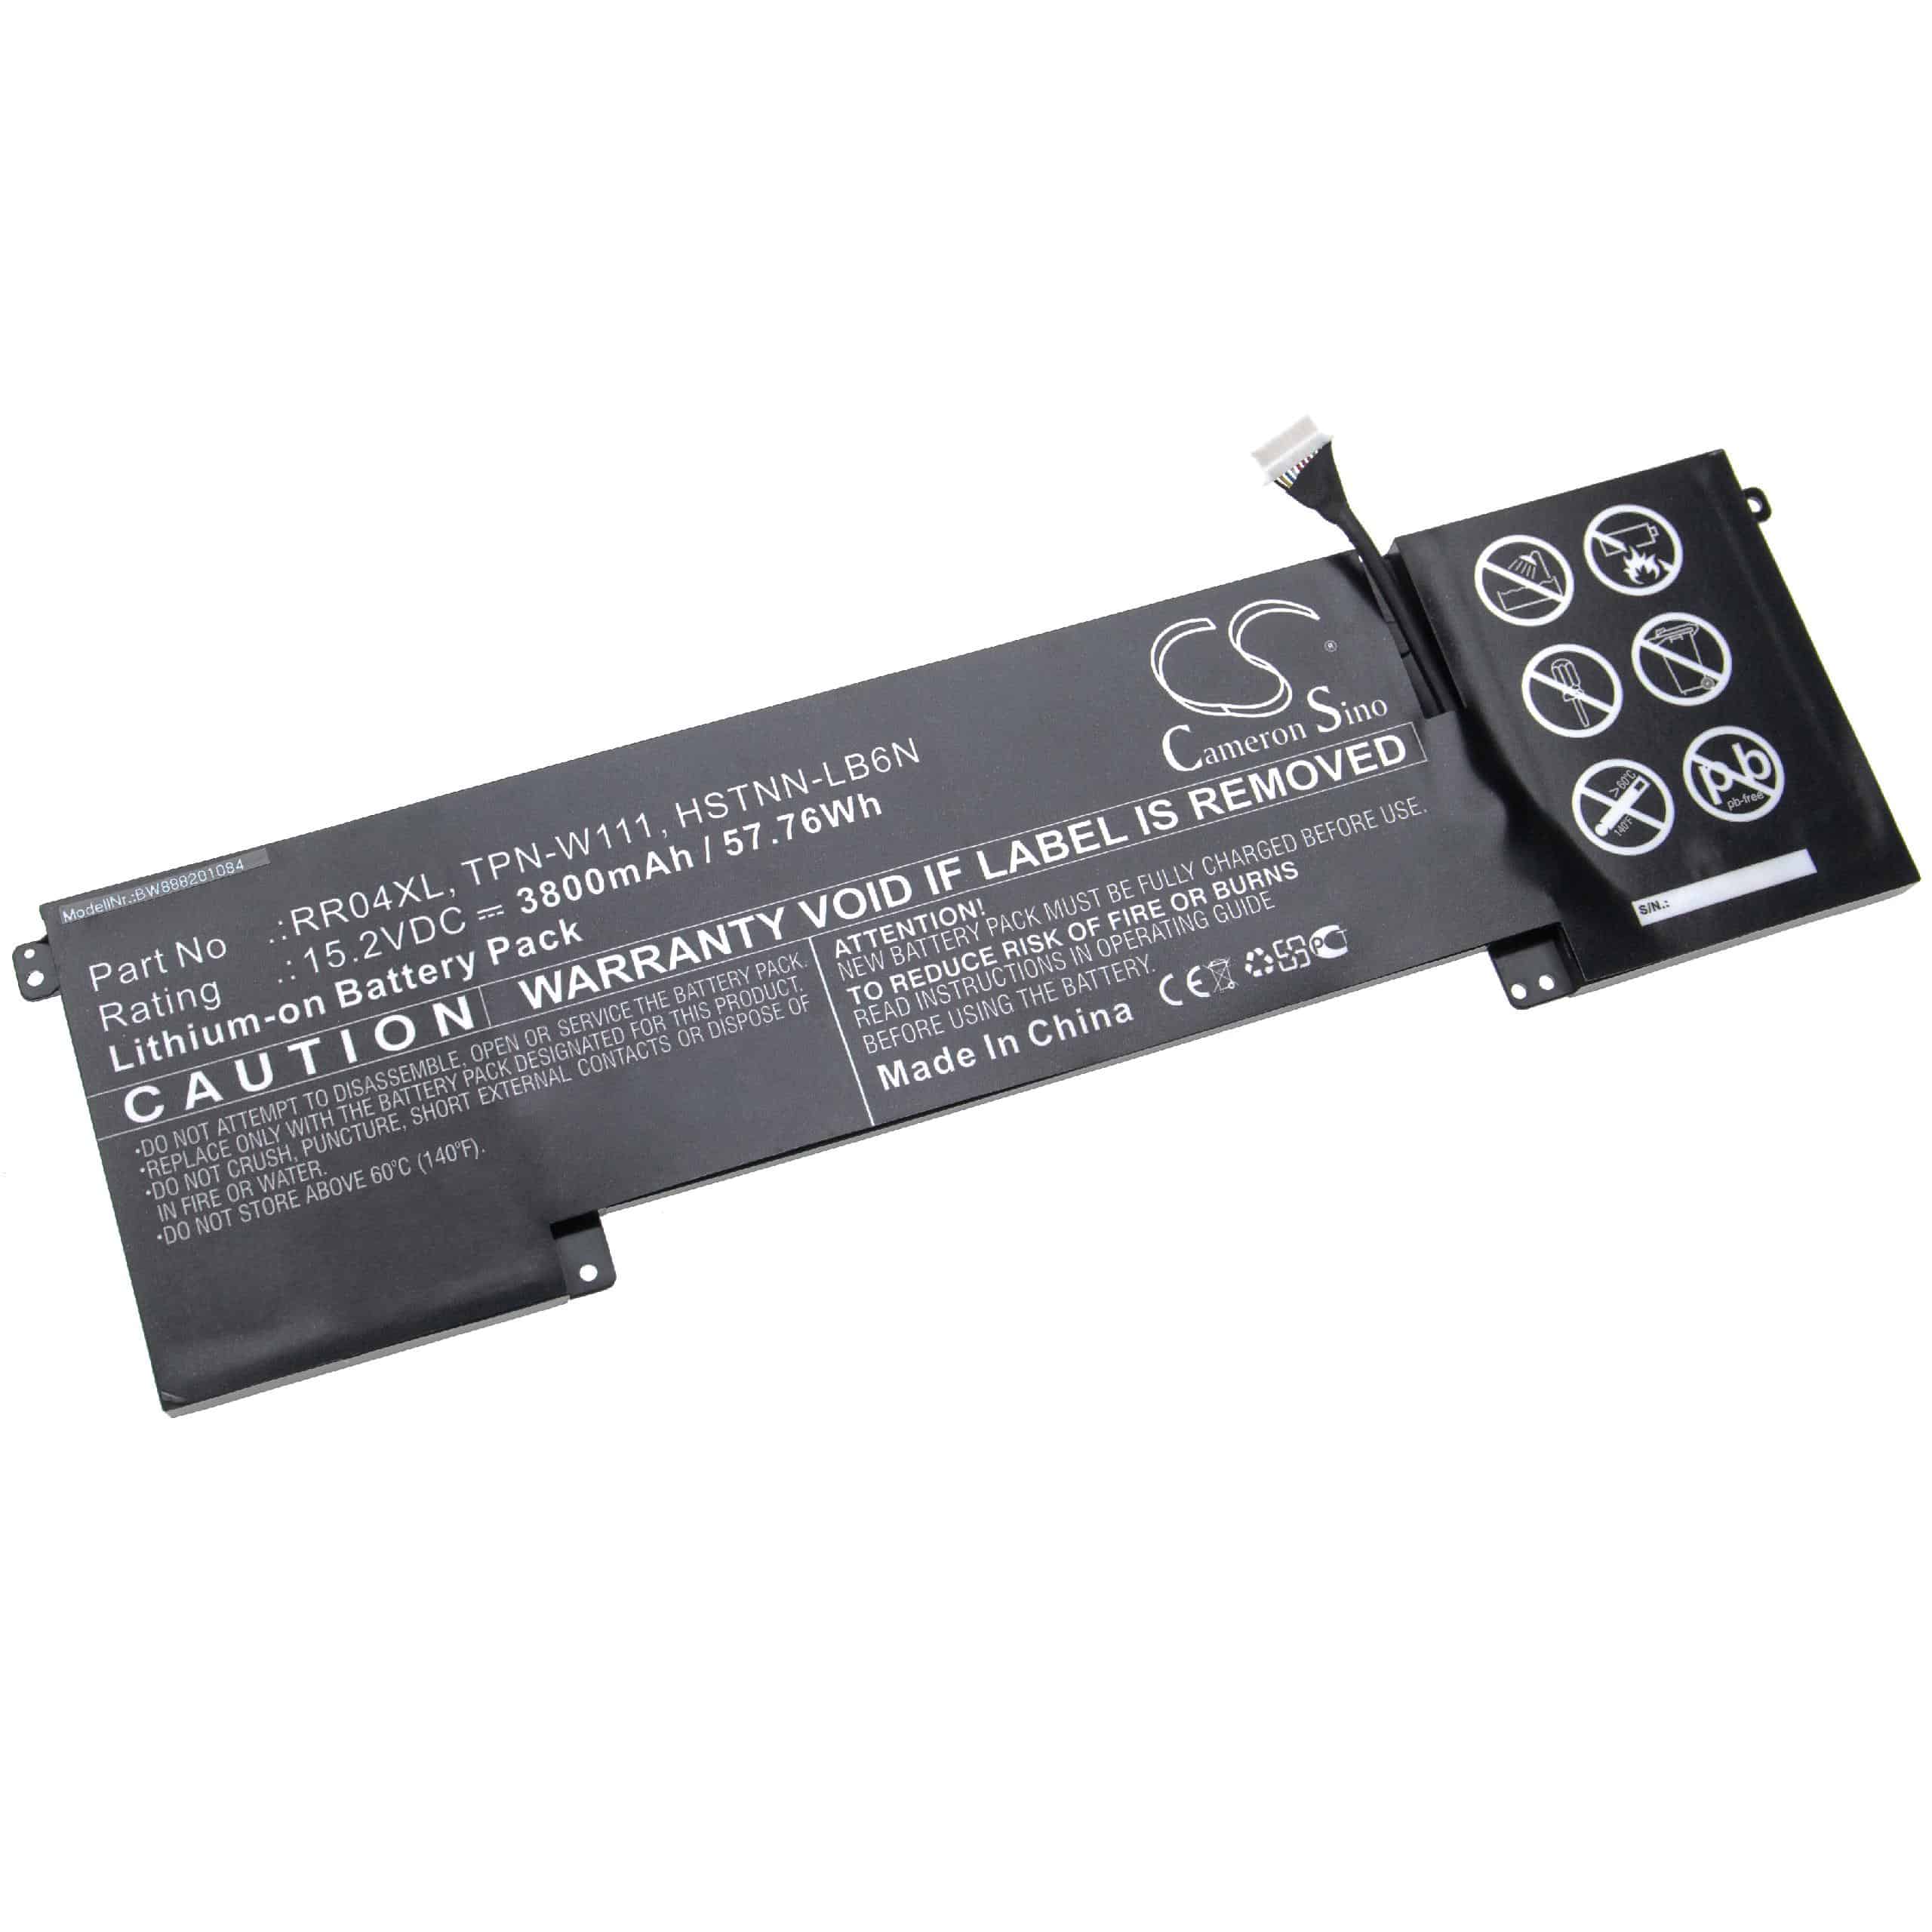 Akumulator do laptopa zamiennik HP 778961-421, 778978-005, 778951-421 - 3800 mAh 15,2 V Li-Ion, czarny